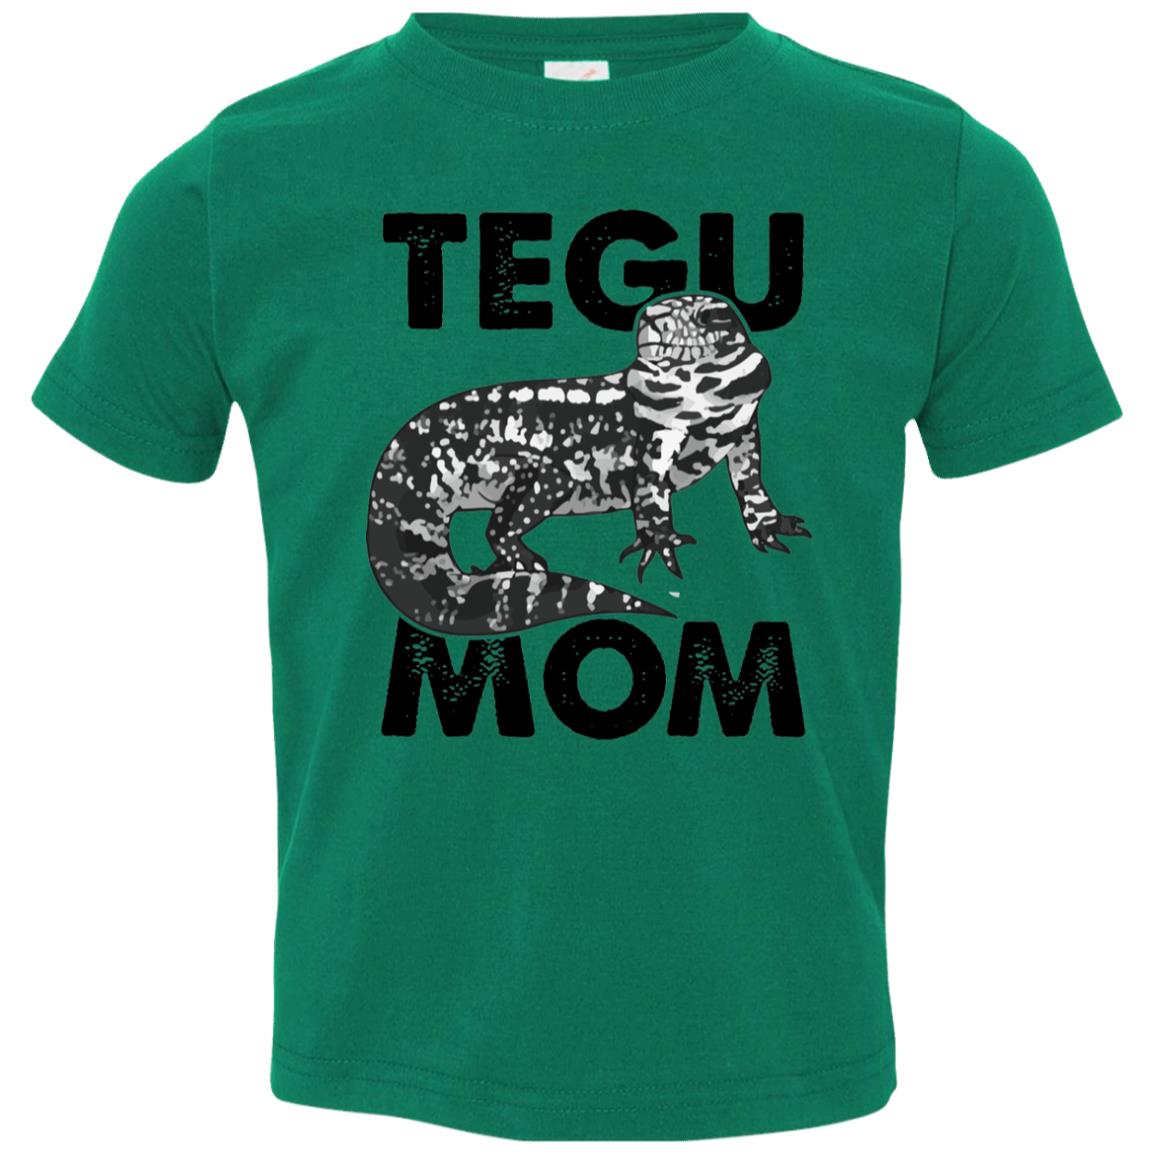 Tegu Mom - Toddler T-Shirt